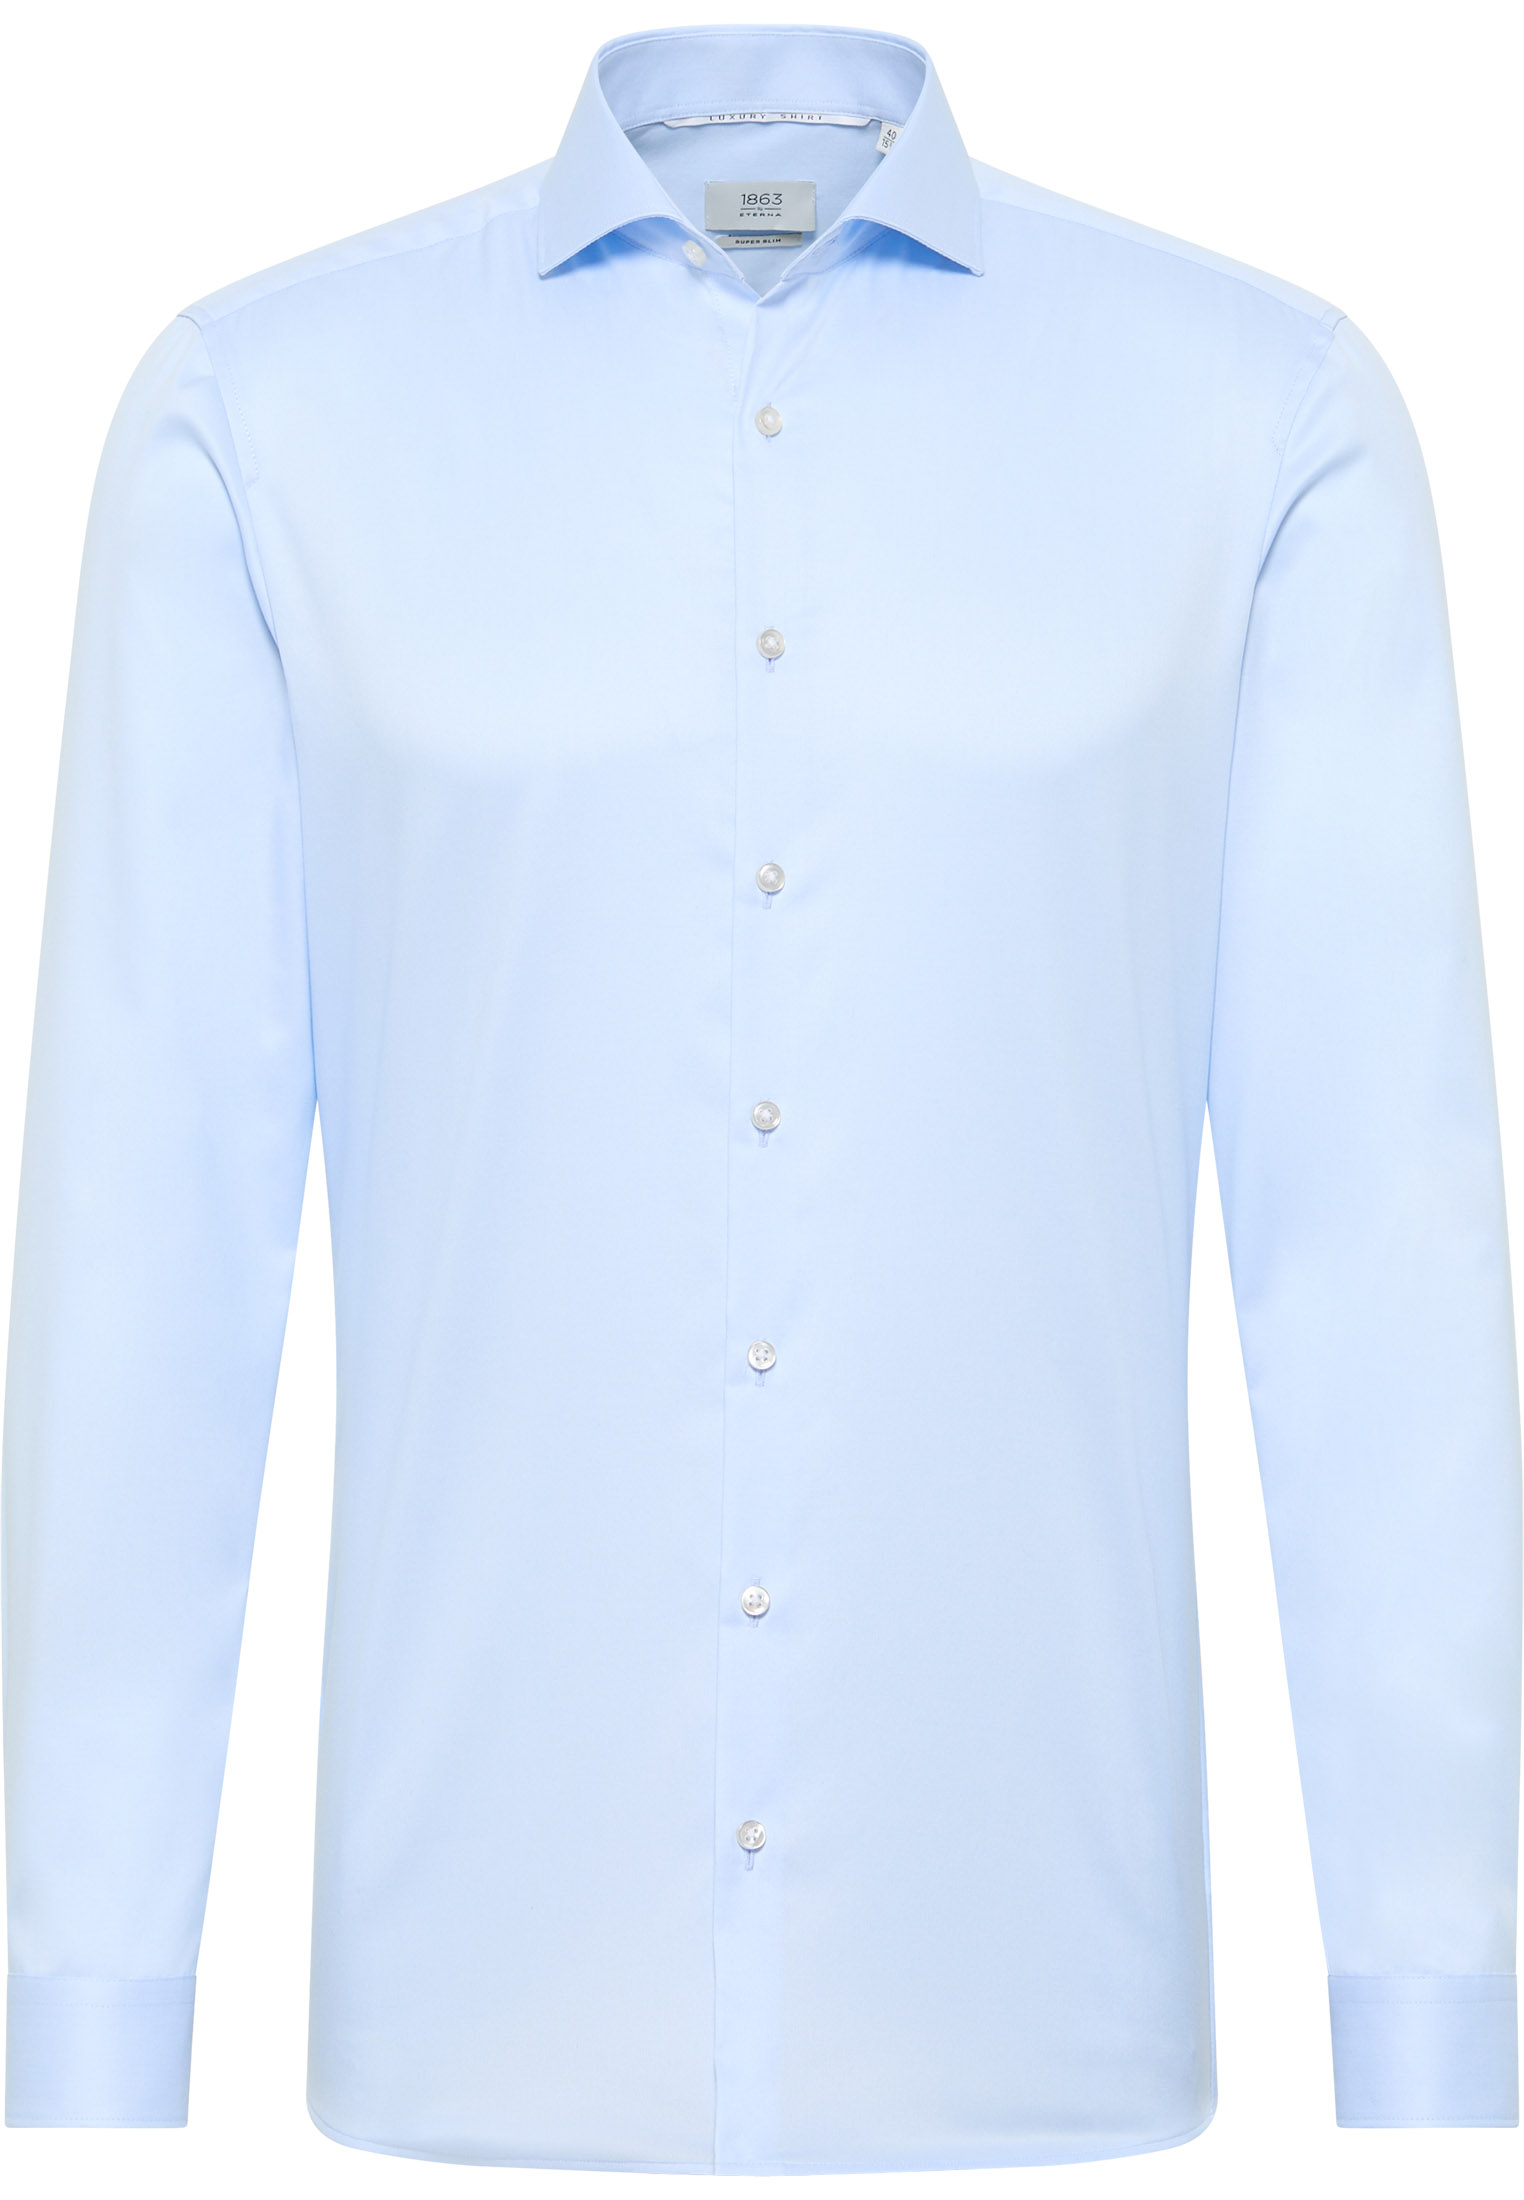 SUPER SLIM Luxury Shirt bleu clair uni